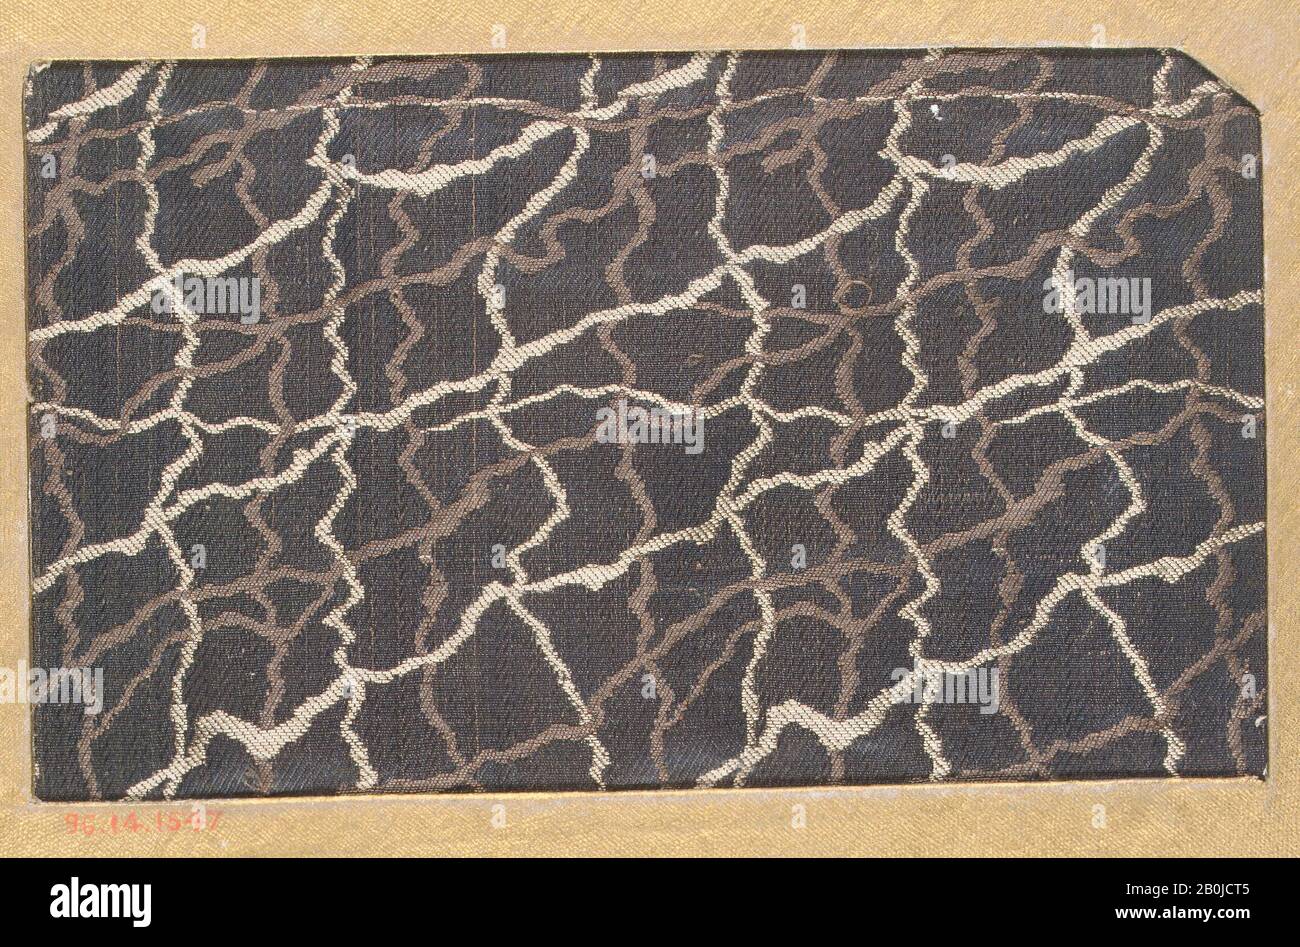 Piece, Japan, 18th–19th century, Japan, Silk, 3 1/2 x 5 3/4 in. (8.89 x 14.61 cm), Textiles-Woven Stock Photo